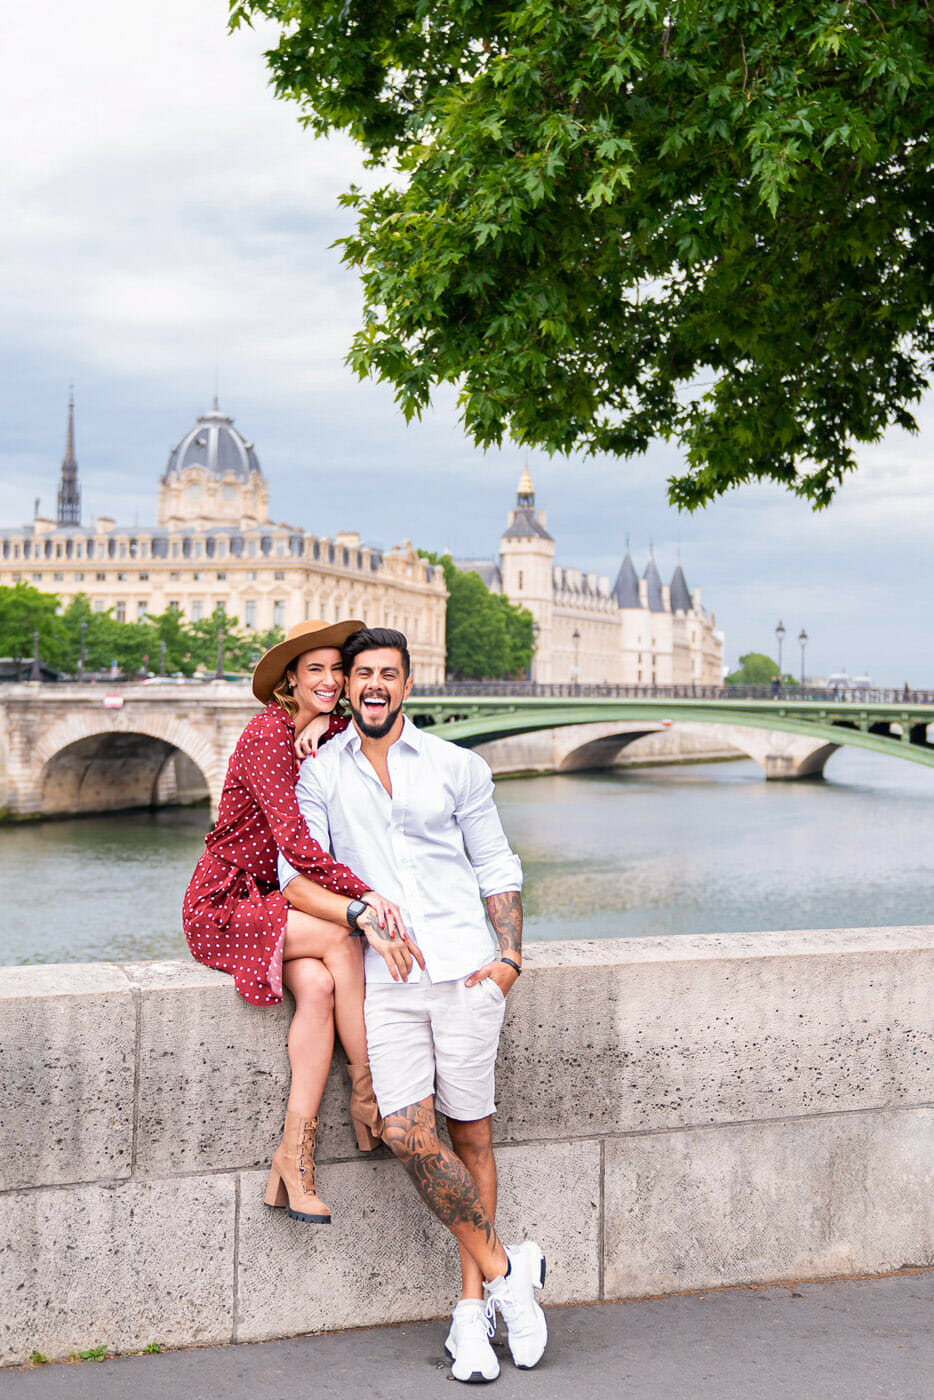 Fun couple photoshoot in Paris near Notre Dame